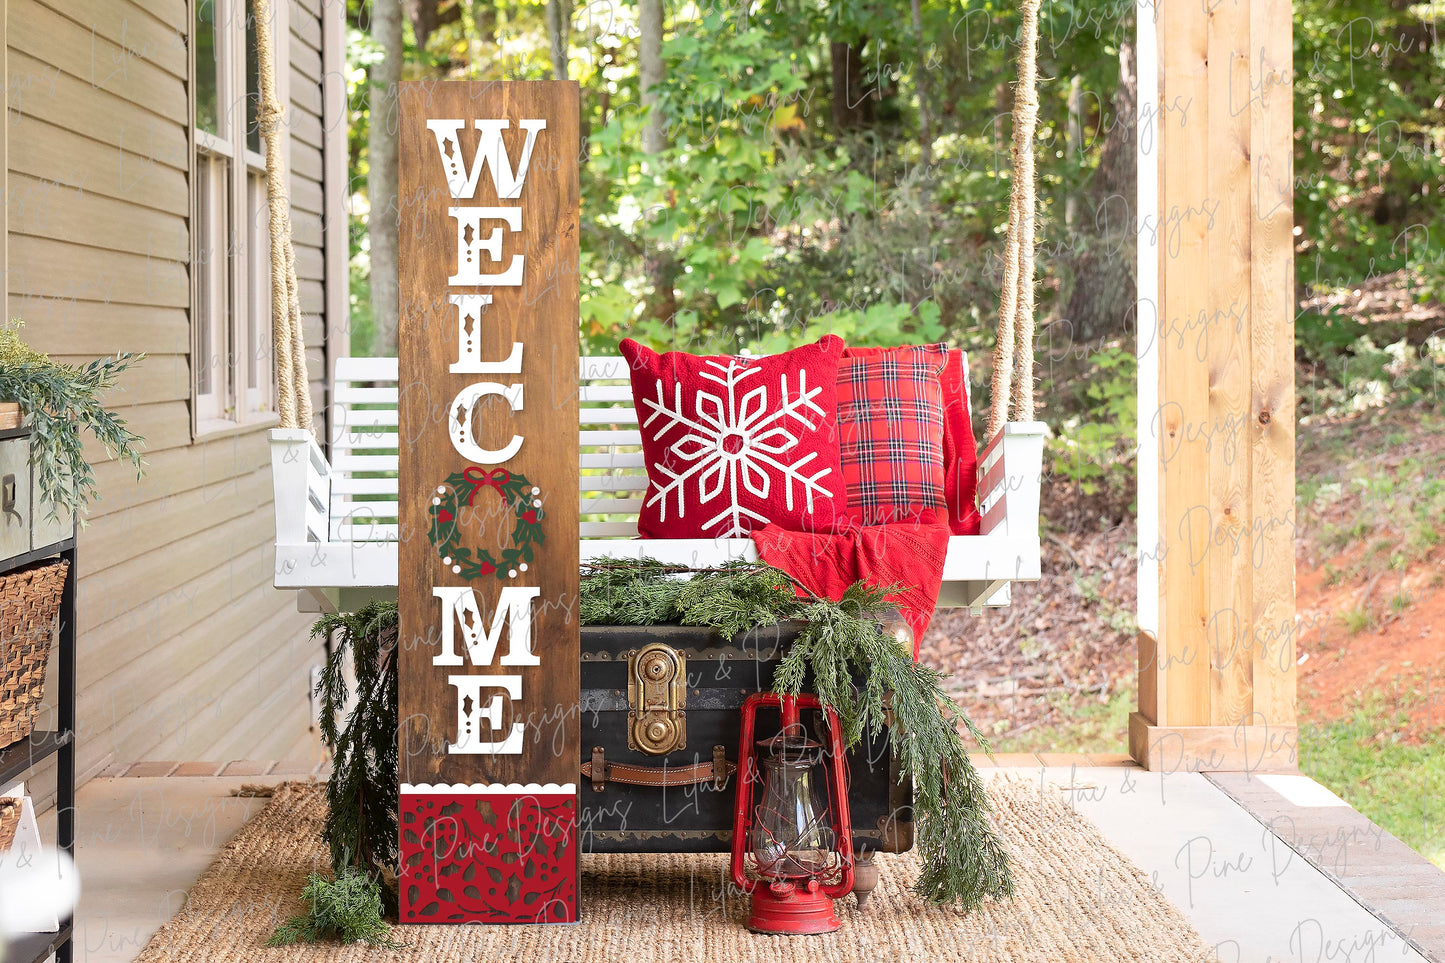 Welcome Christmas leaner SVG - Christmas wreath porch decor - elegant Christmas decor - Glowforge SVG - laser cut file